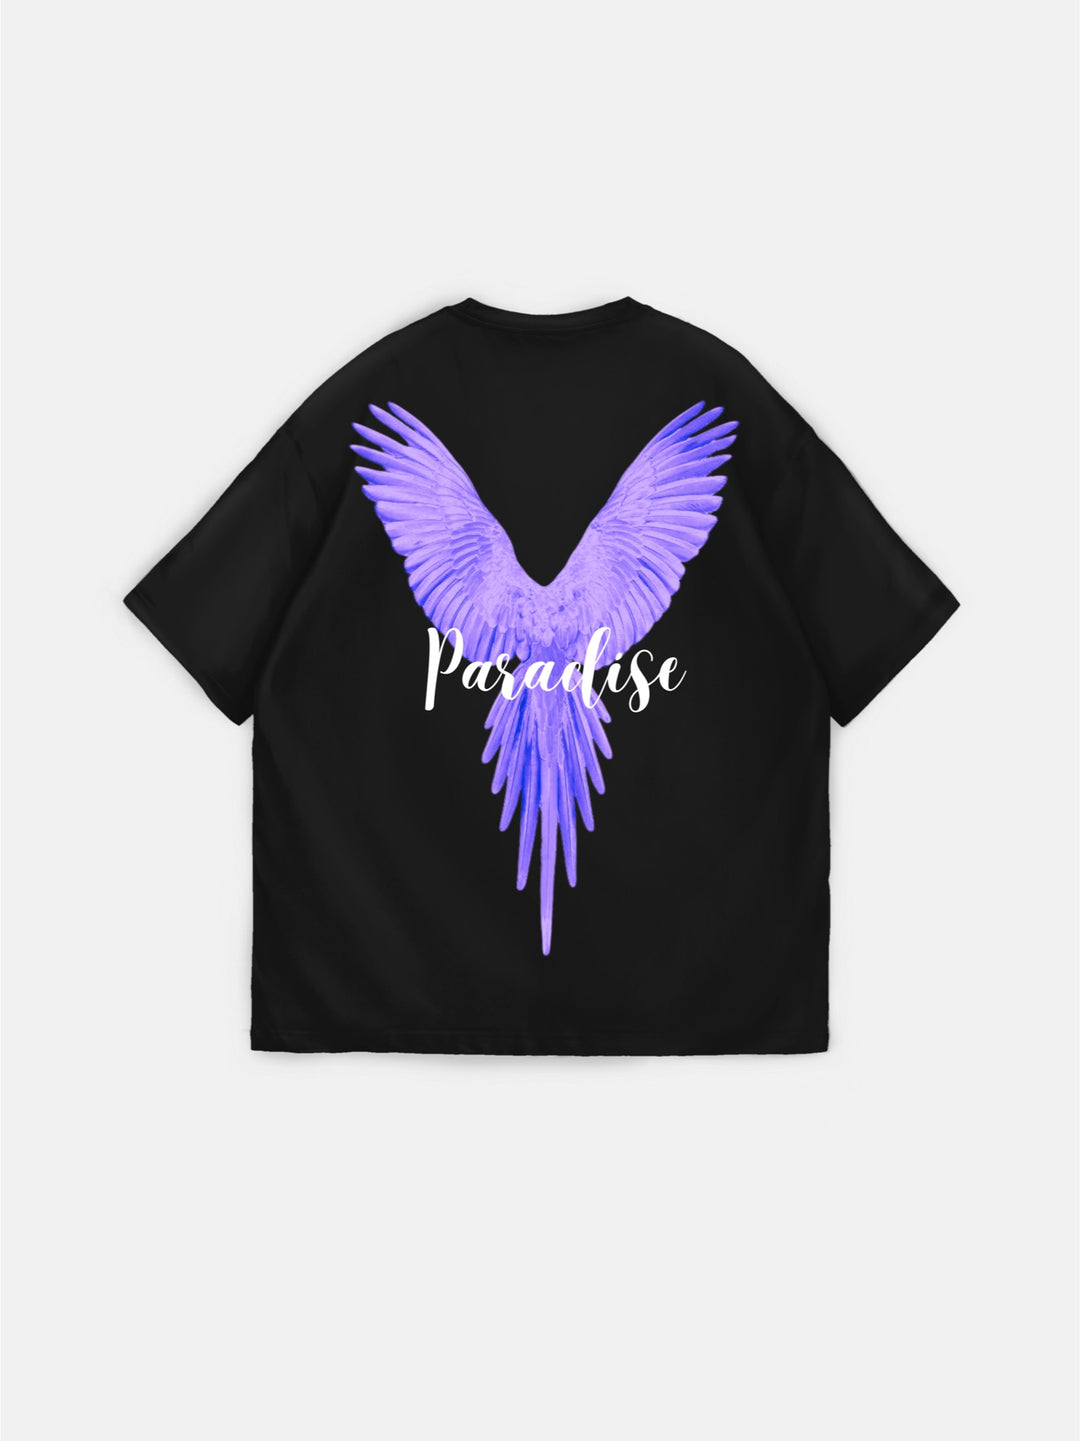 Oversize Parrot Paradise T-shirt - Black and Purple